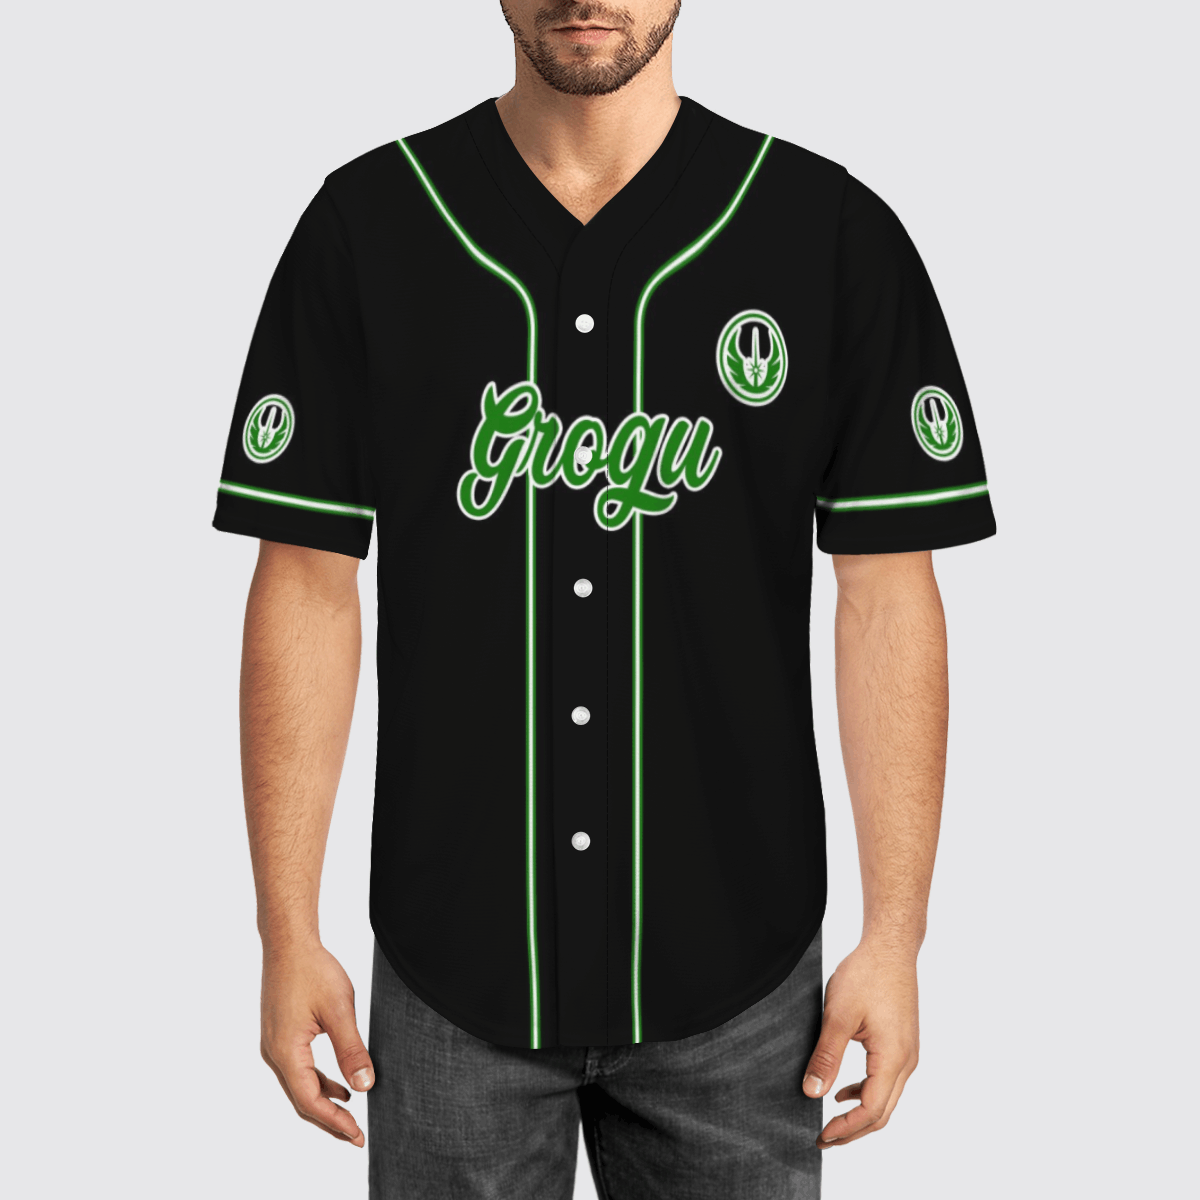 Grogu Star Wars baseball shirt – LIMITED EDITION